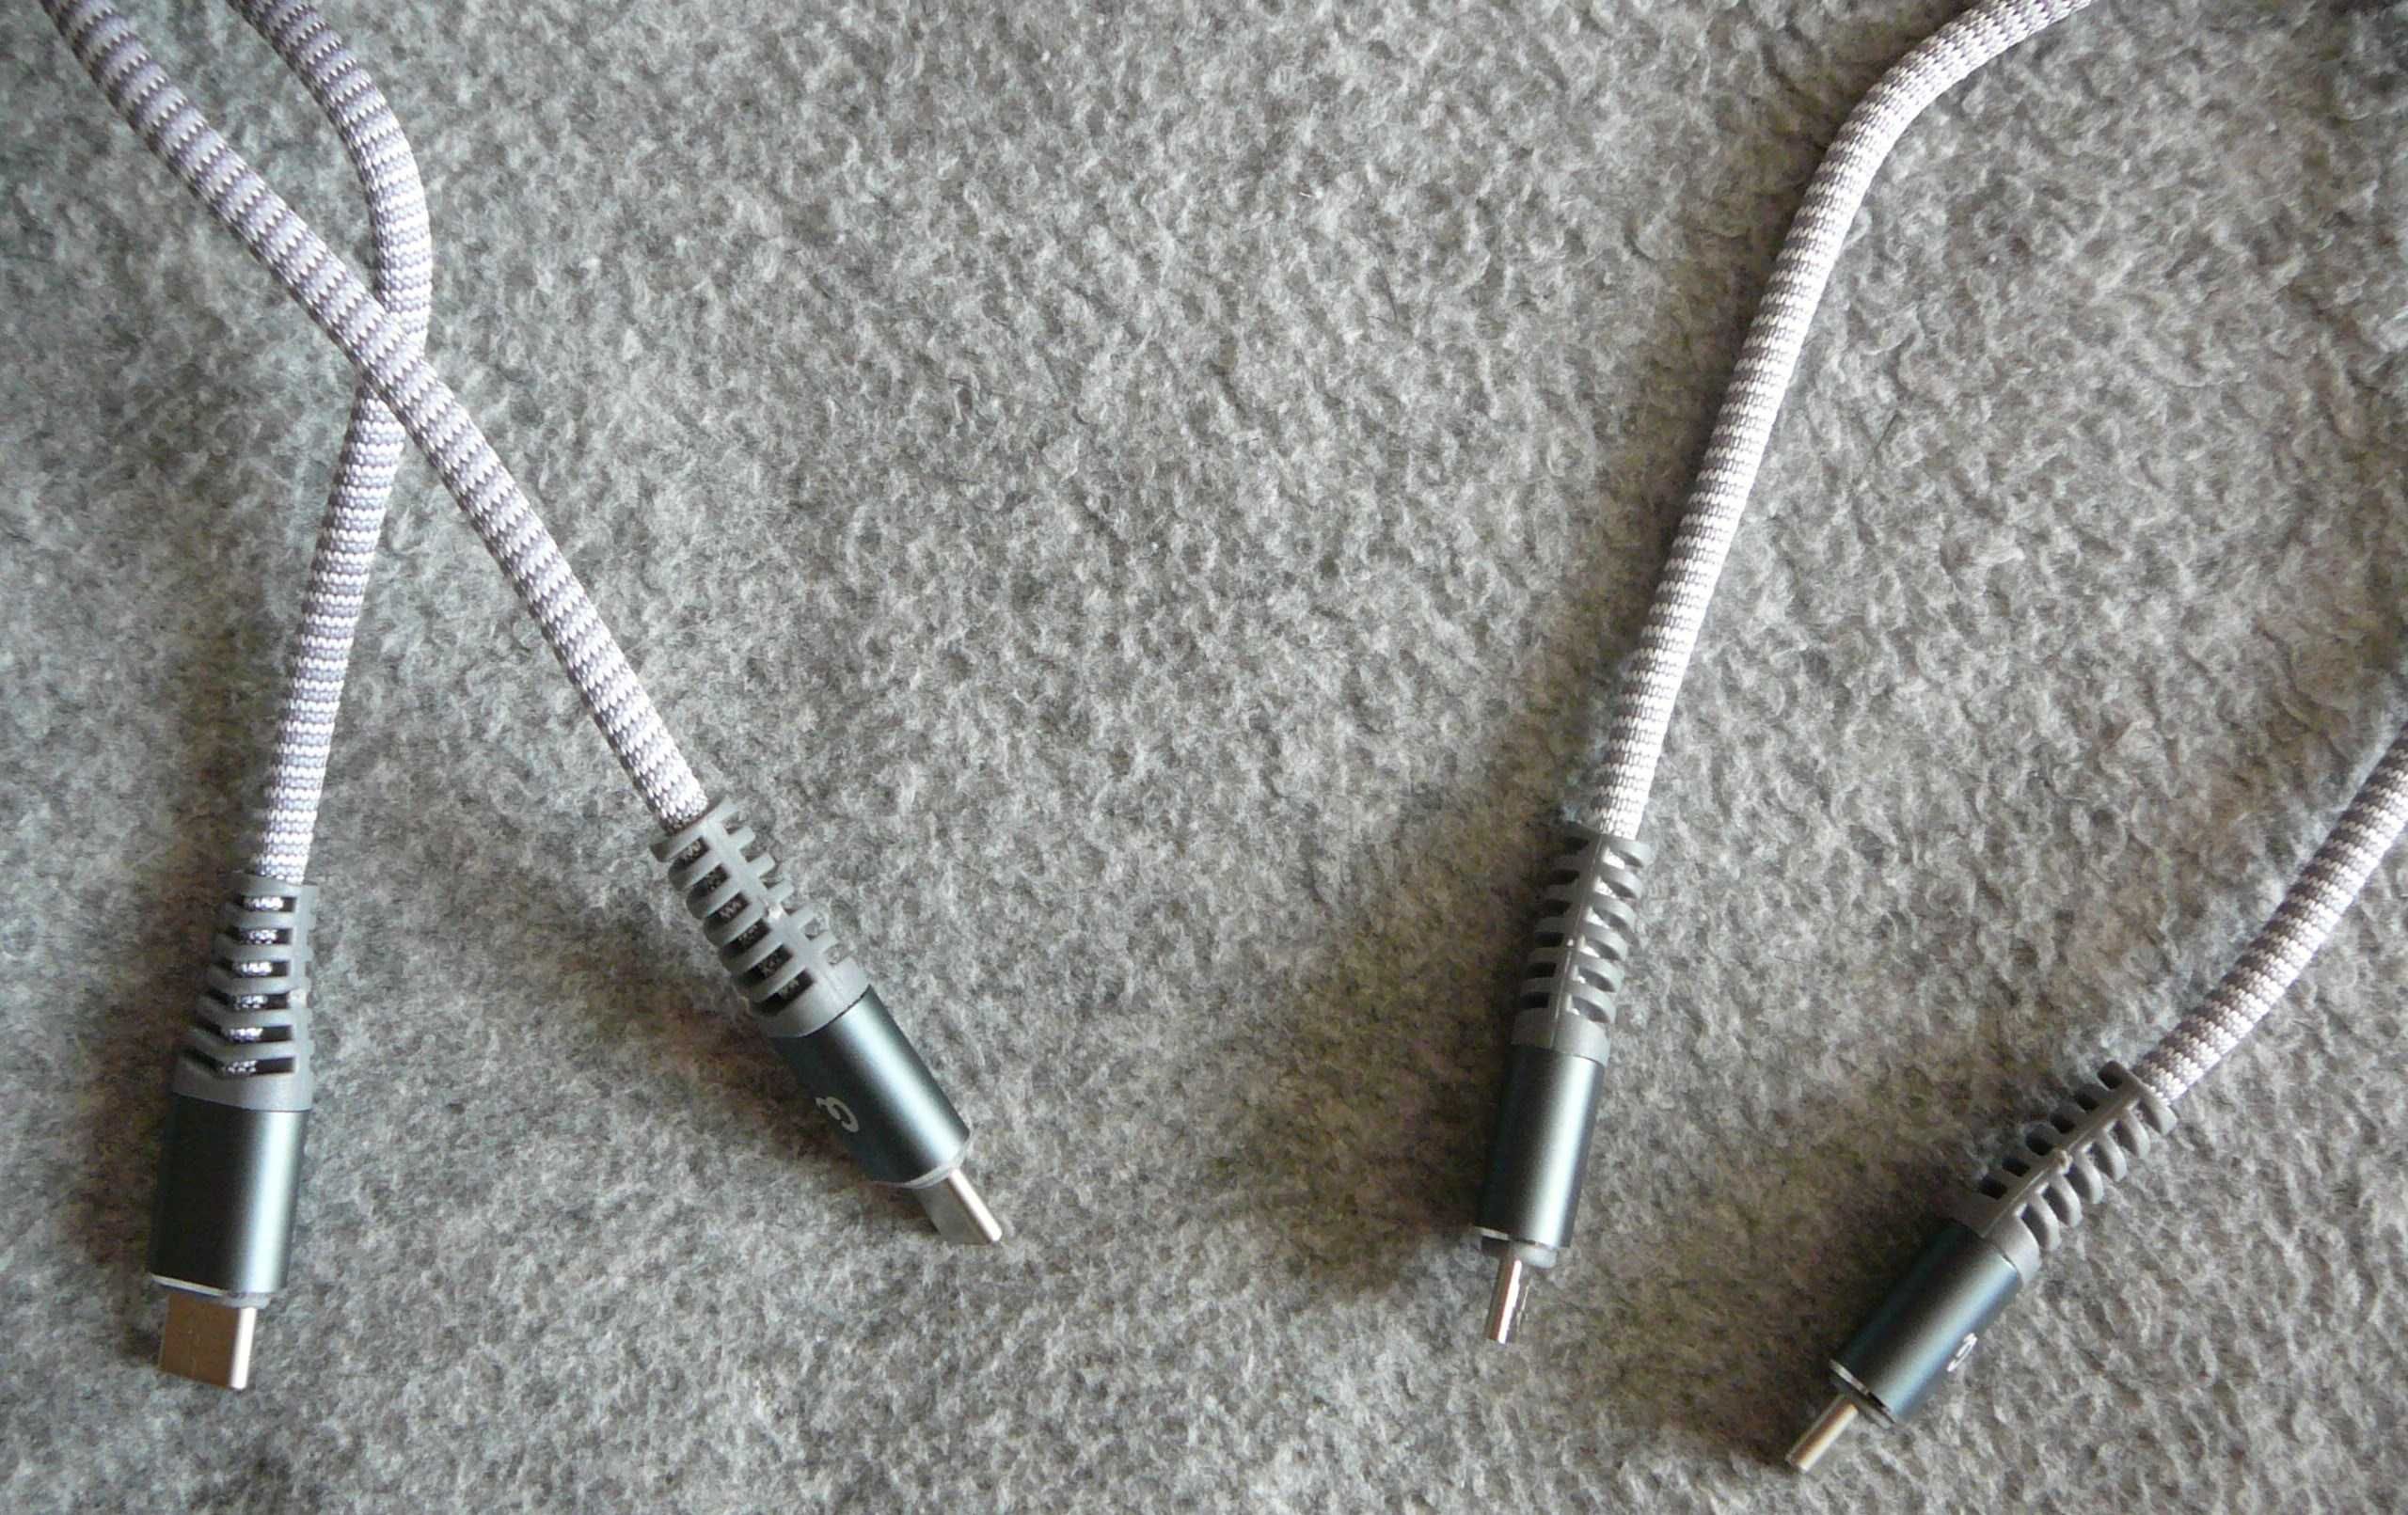 Зарядное устройство Aukey PA-D5 (GAN2) с двумя USB Type-C + 2 кабеля